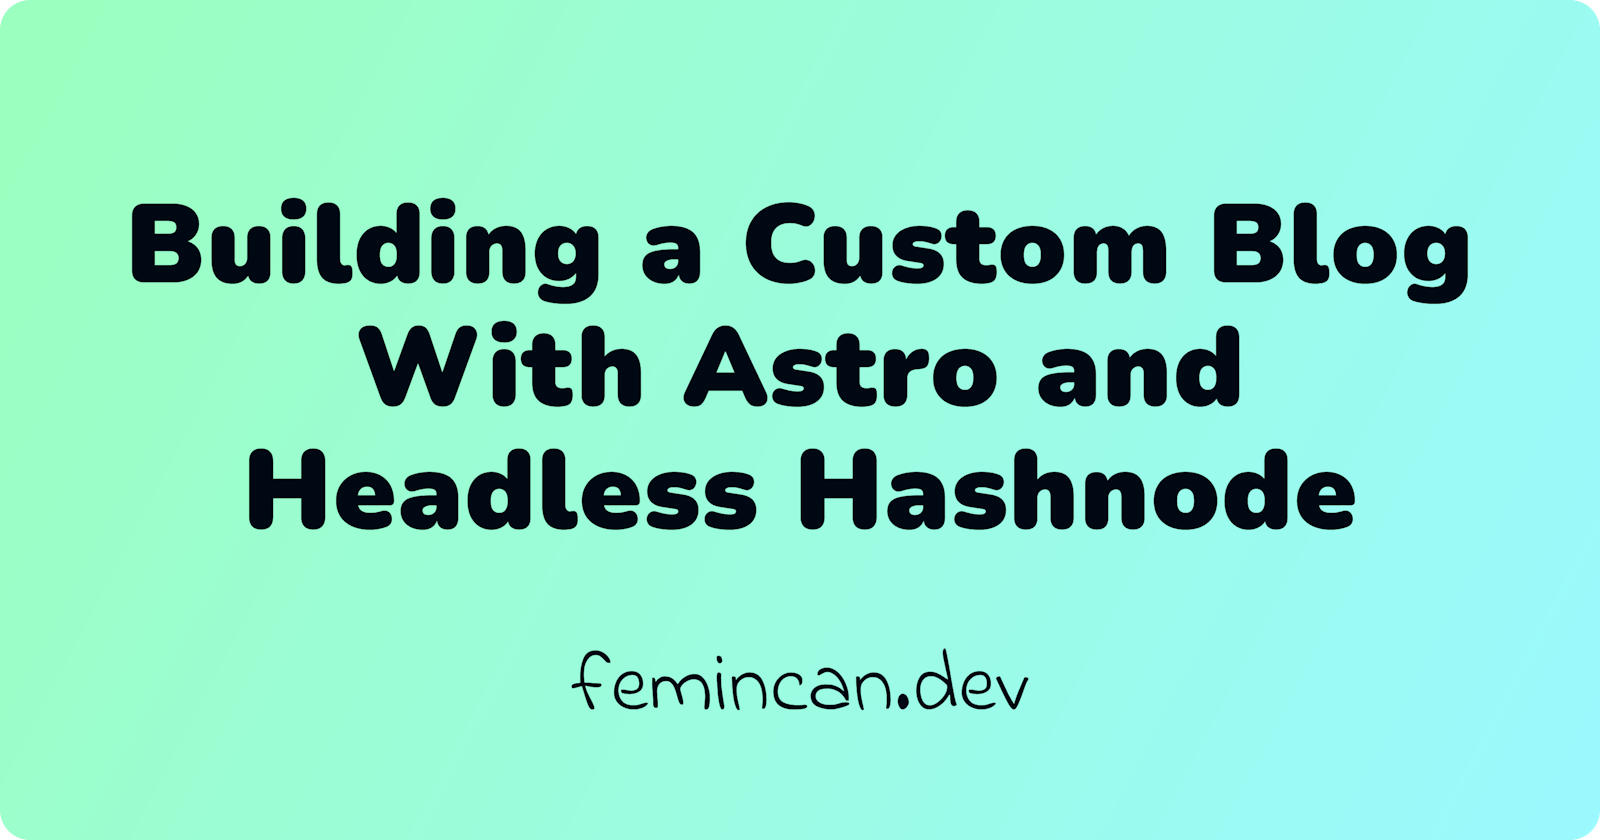 How I Built My Custom Blog With Astro and Headless Hashnode